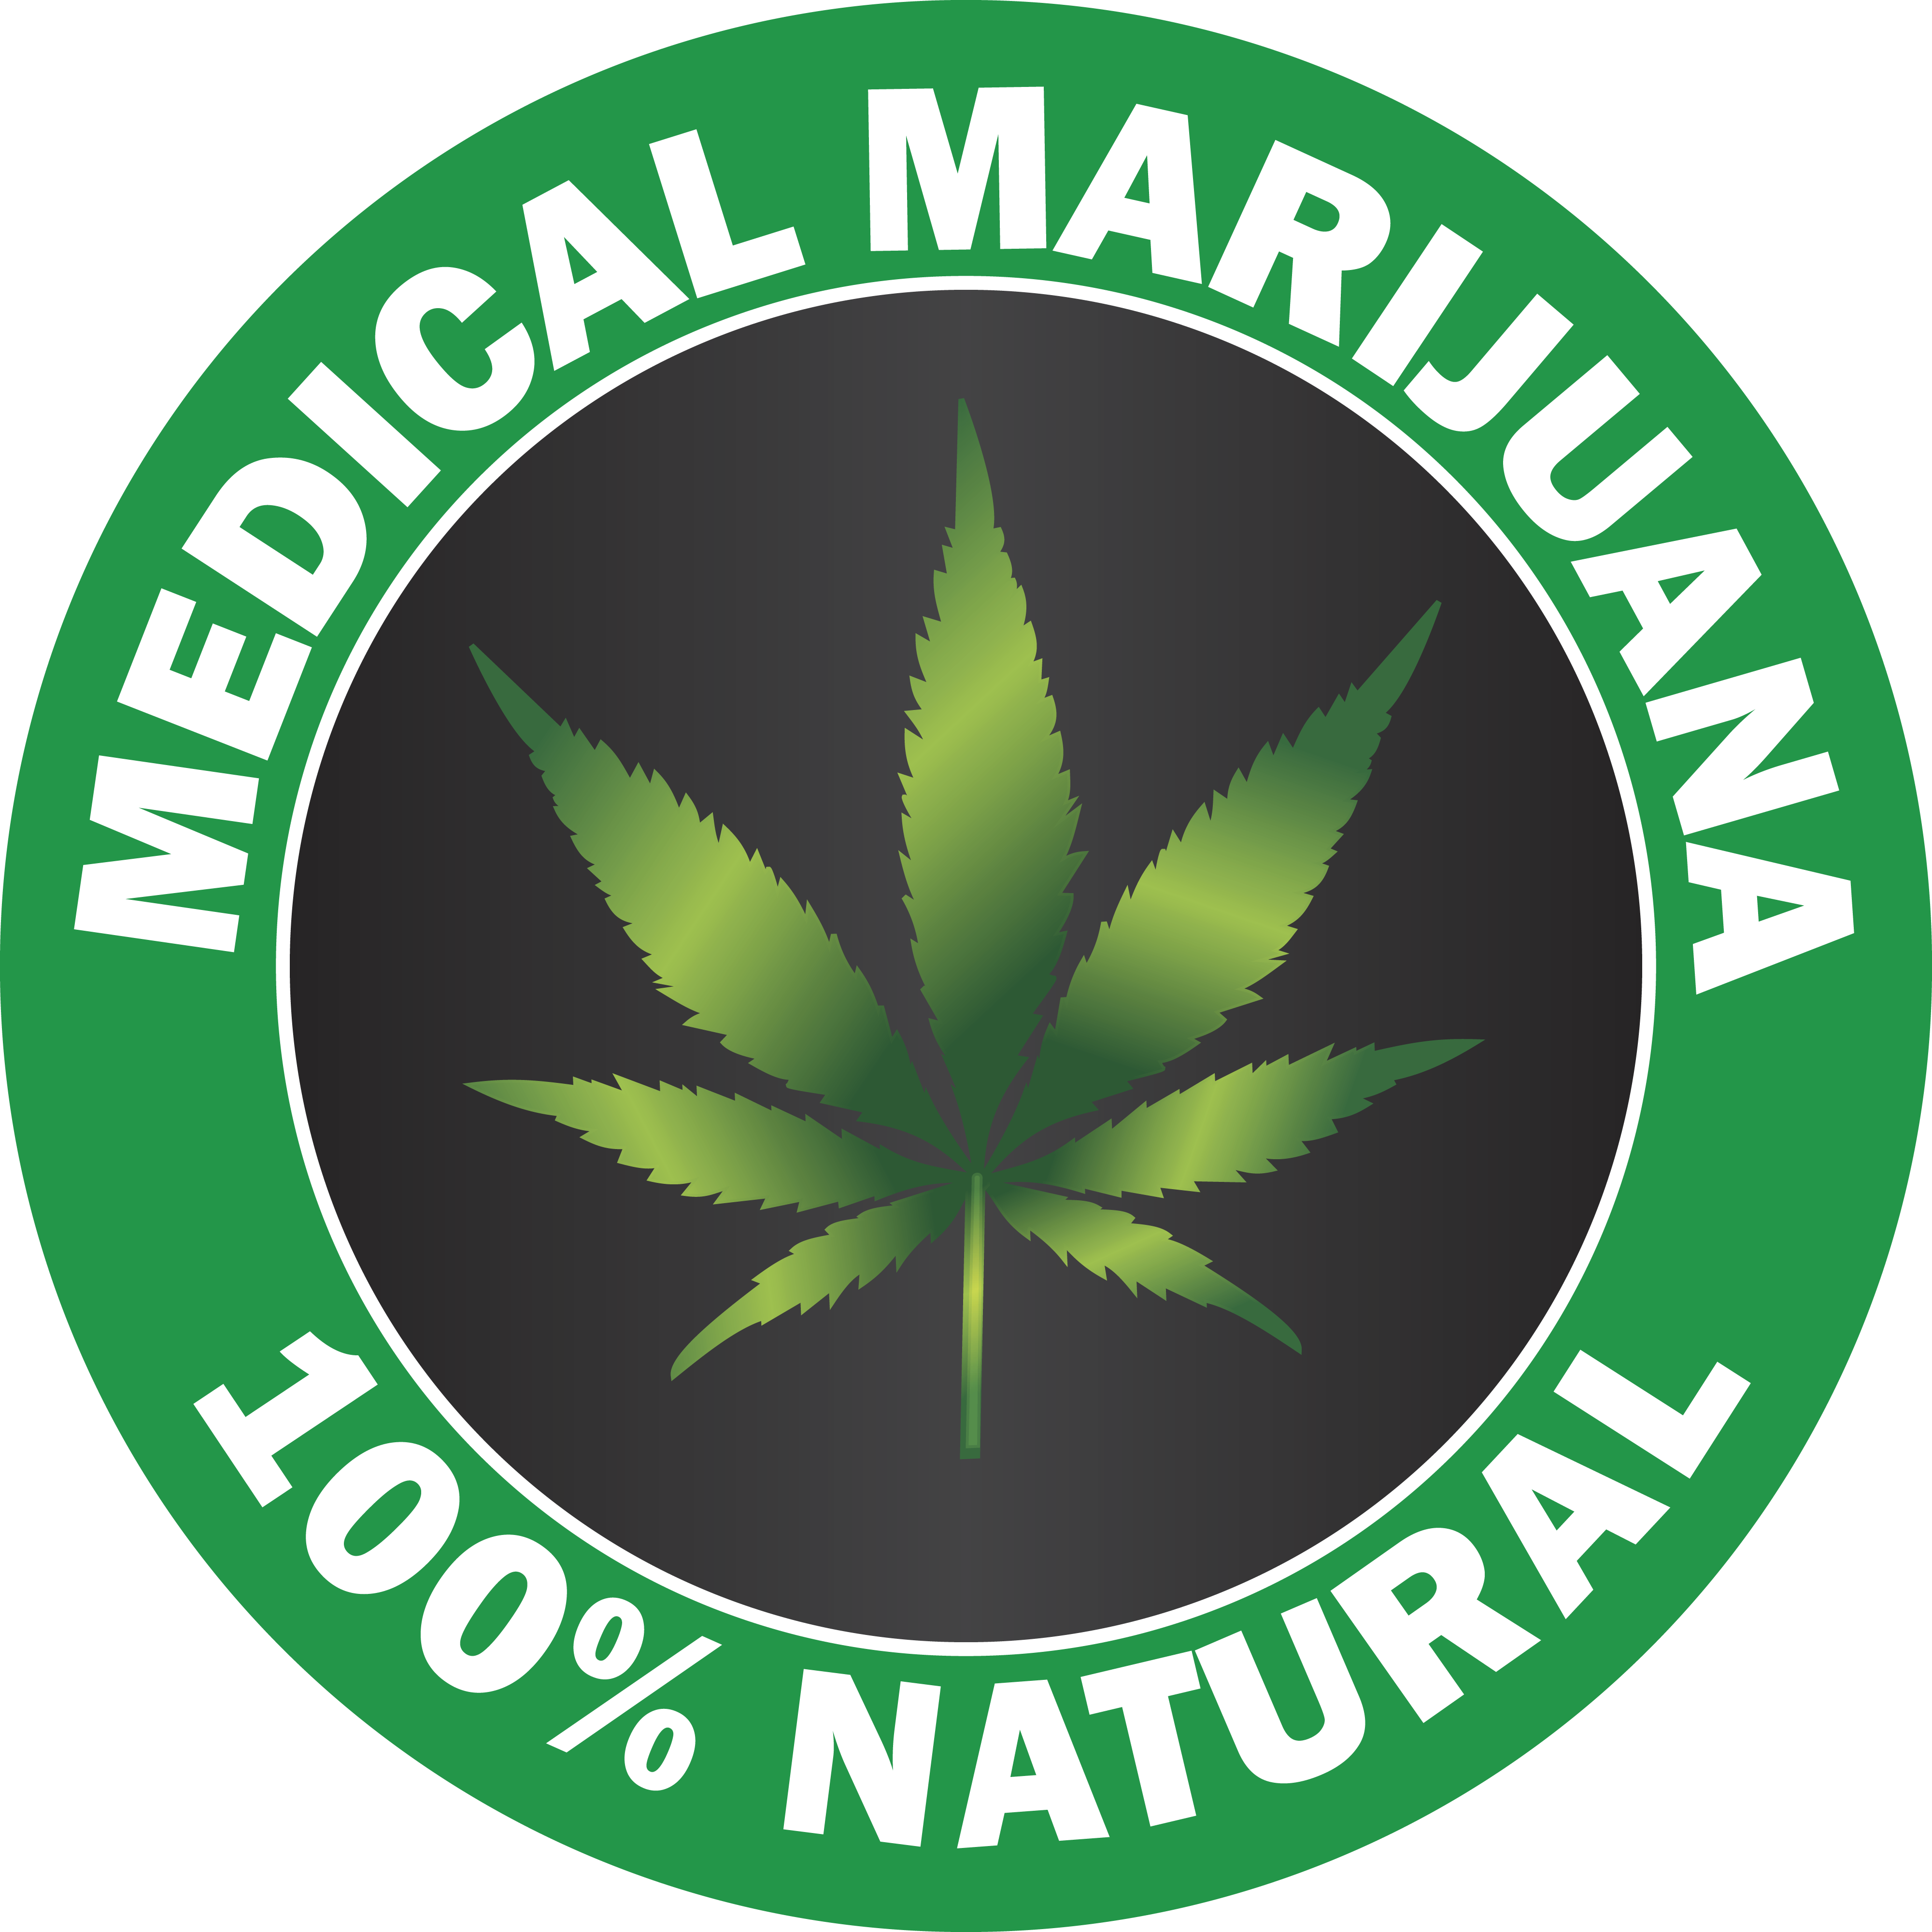 Free Clipart Of A Cannabis Leaf - Medical Marijuana 100% Natural (4000x4000)